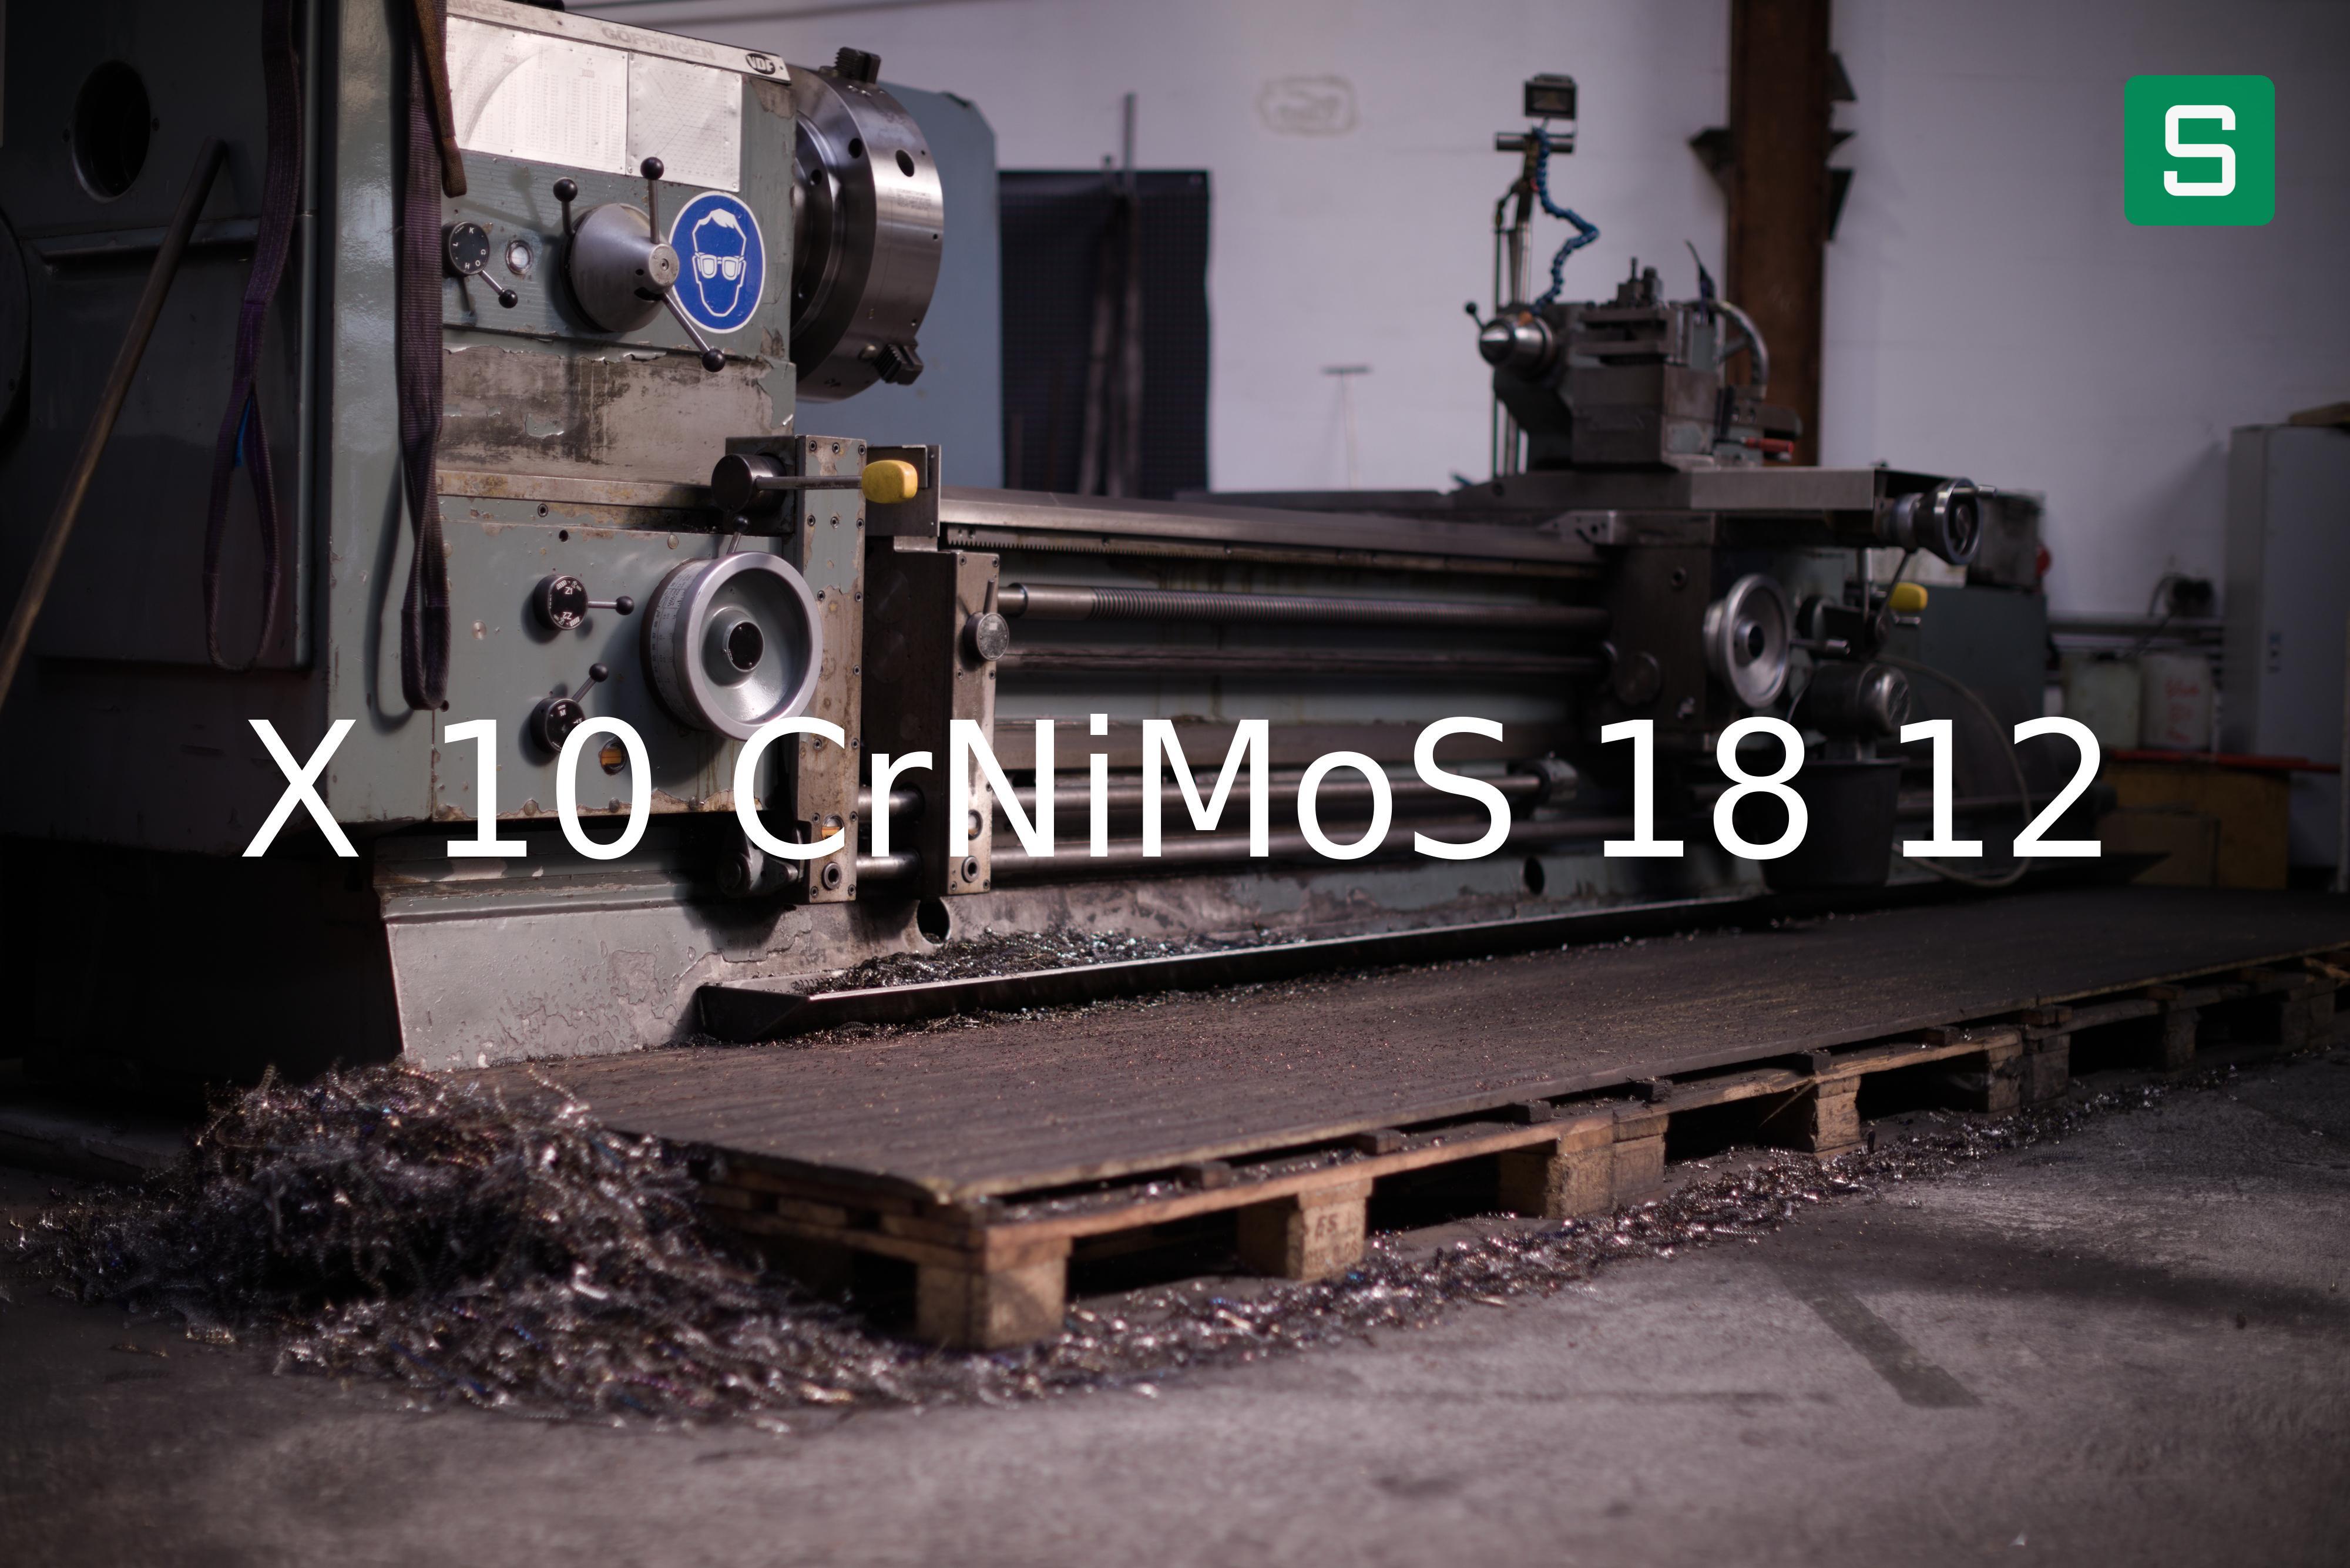 Steel Material: X 10 CrNiMoS 18 12